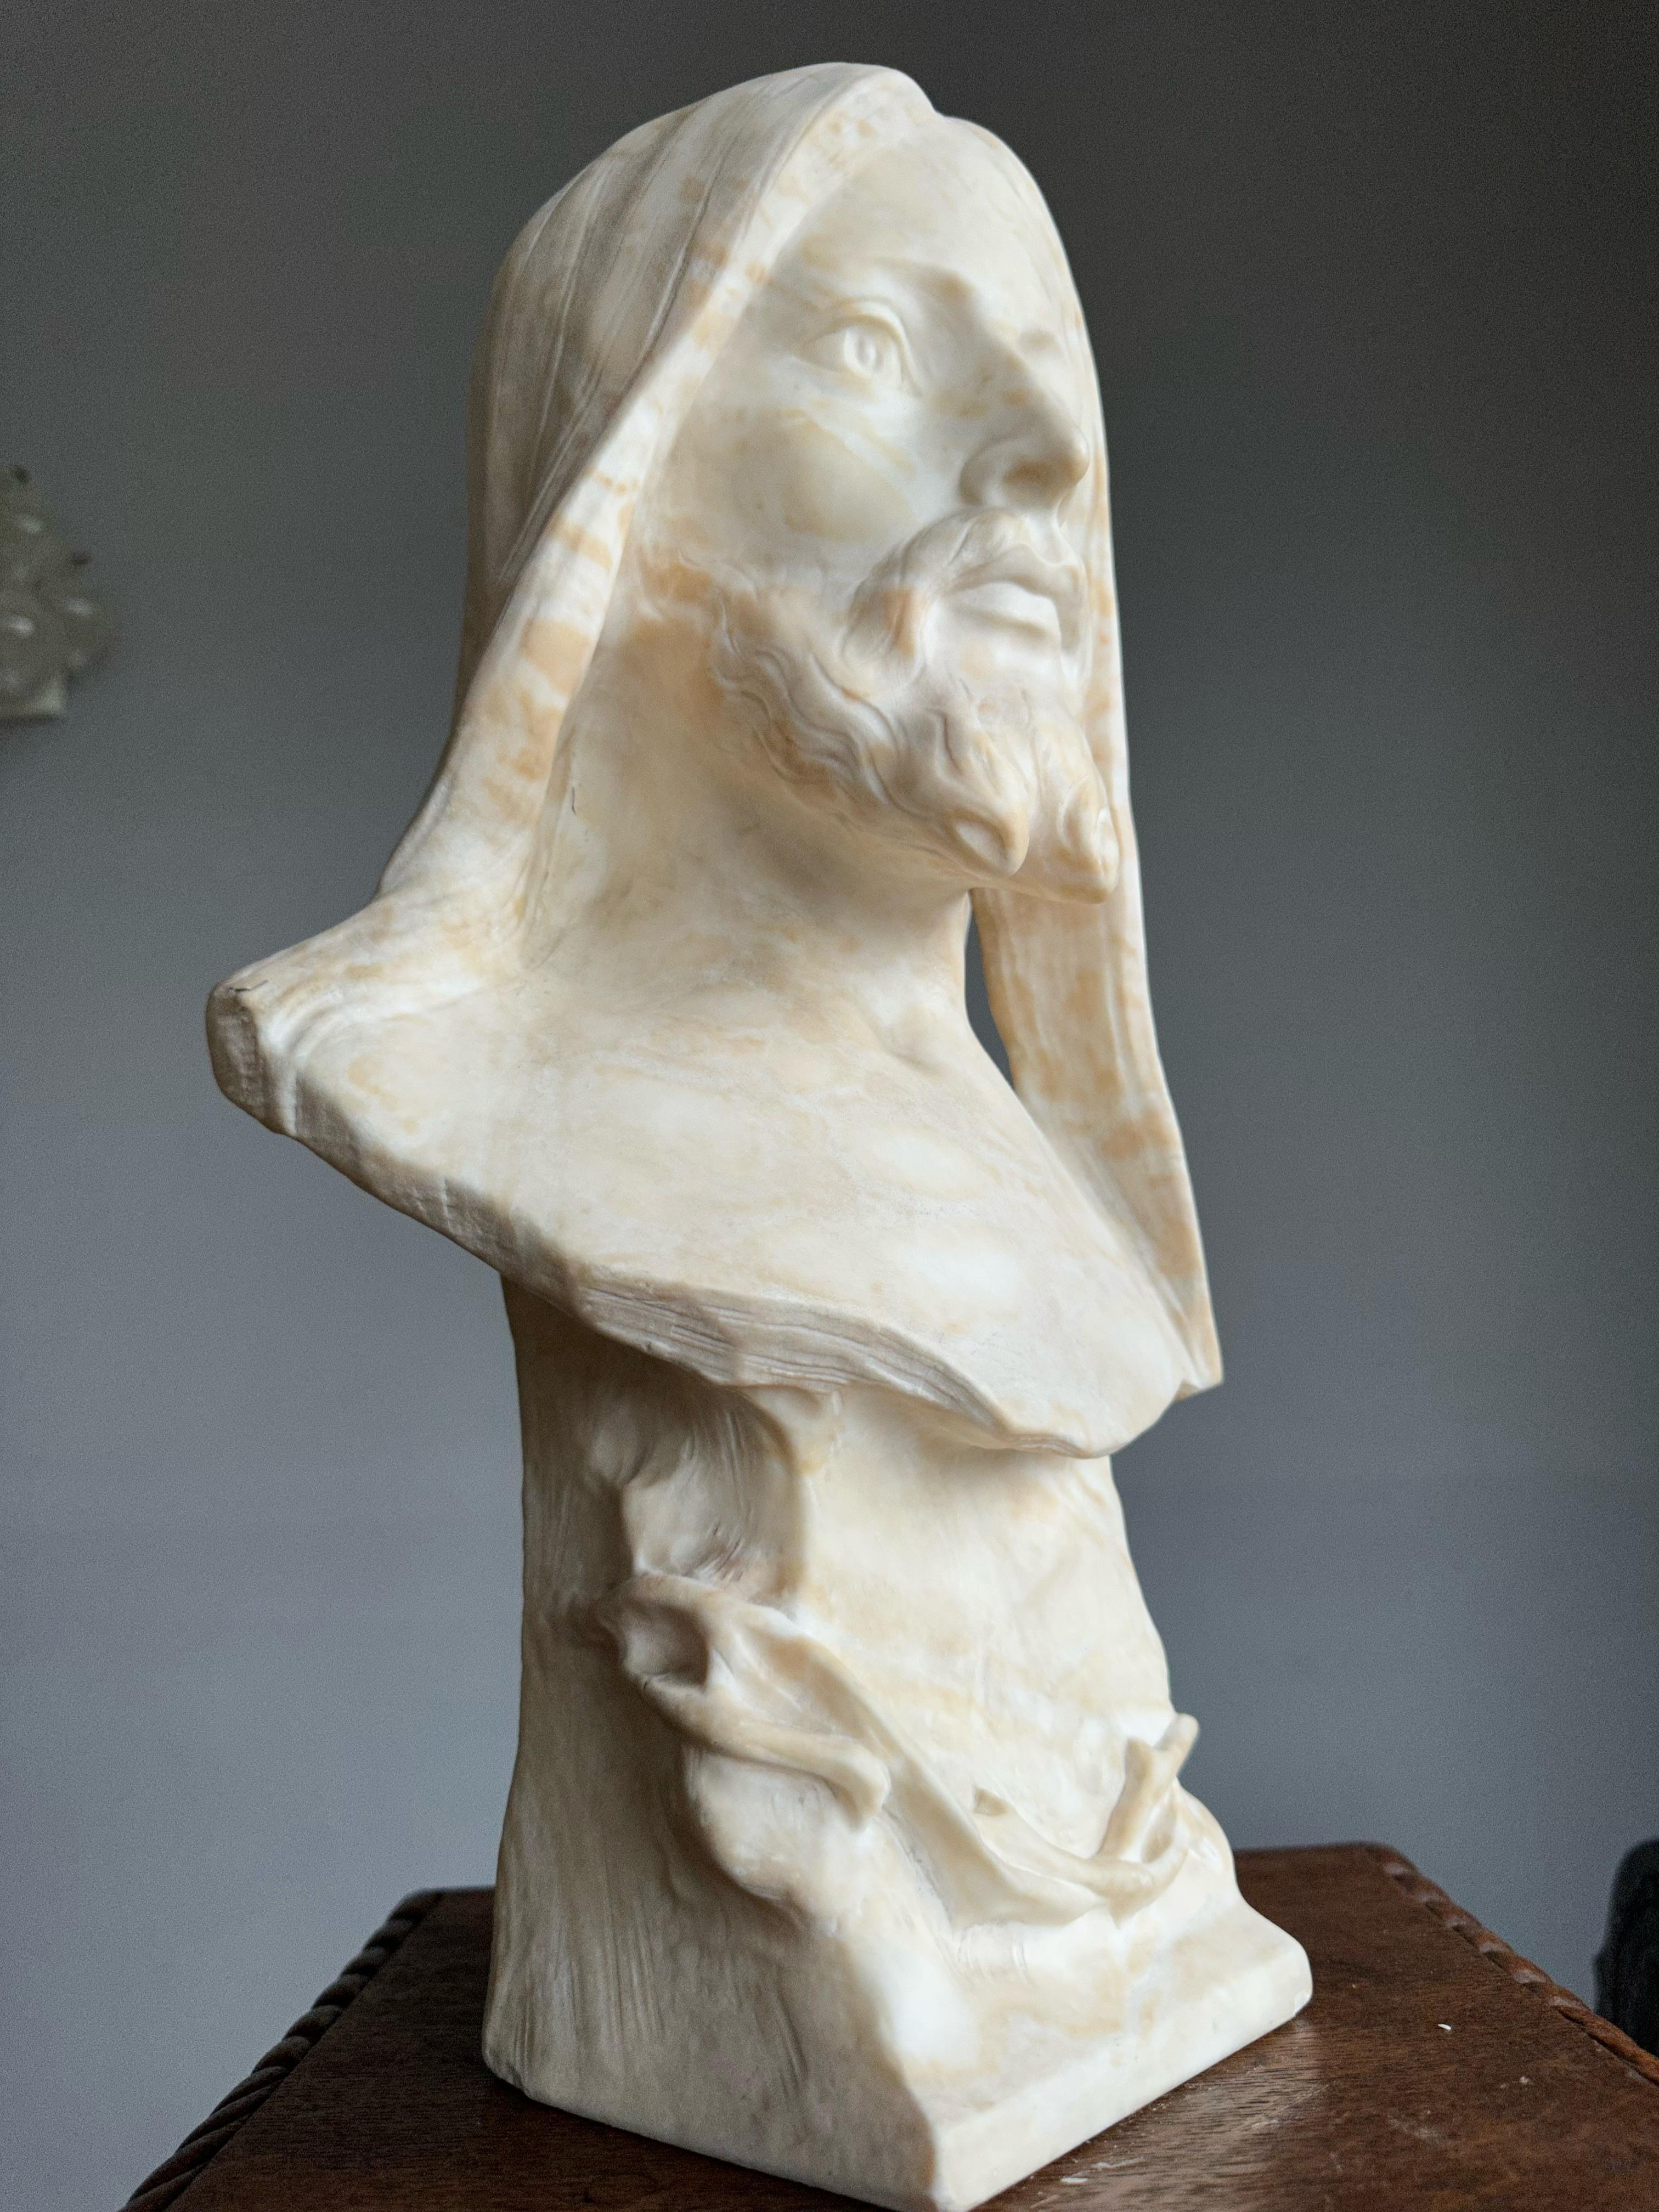 Hand-Carved Antique, Early 1900 Large Hand Carved Alabaster Sculpture / Bust of Jesus Christ For Sale